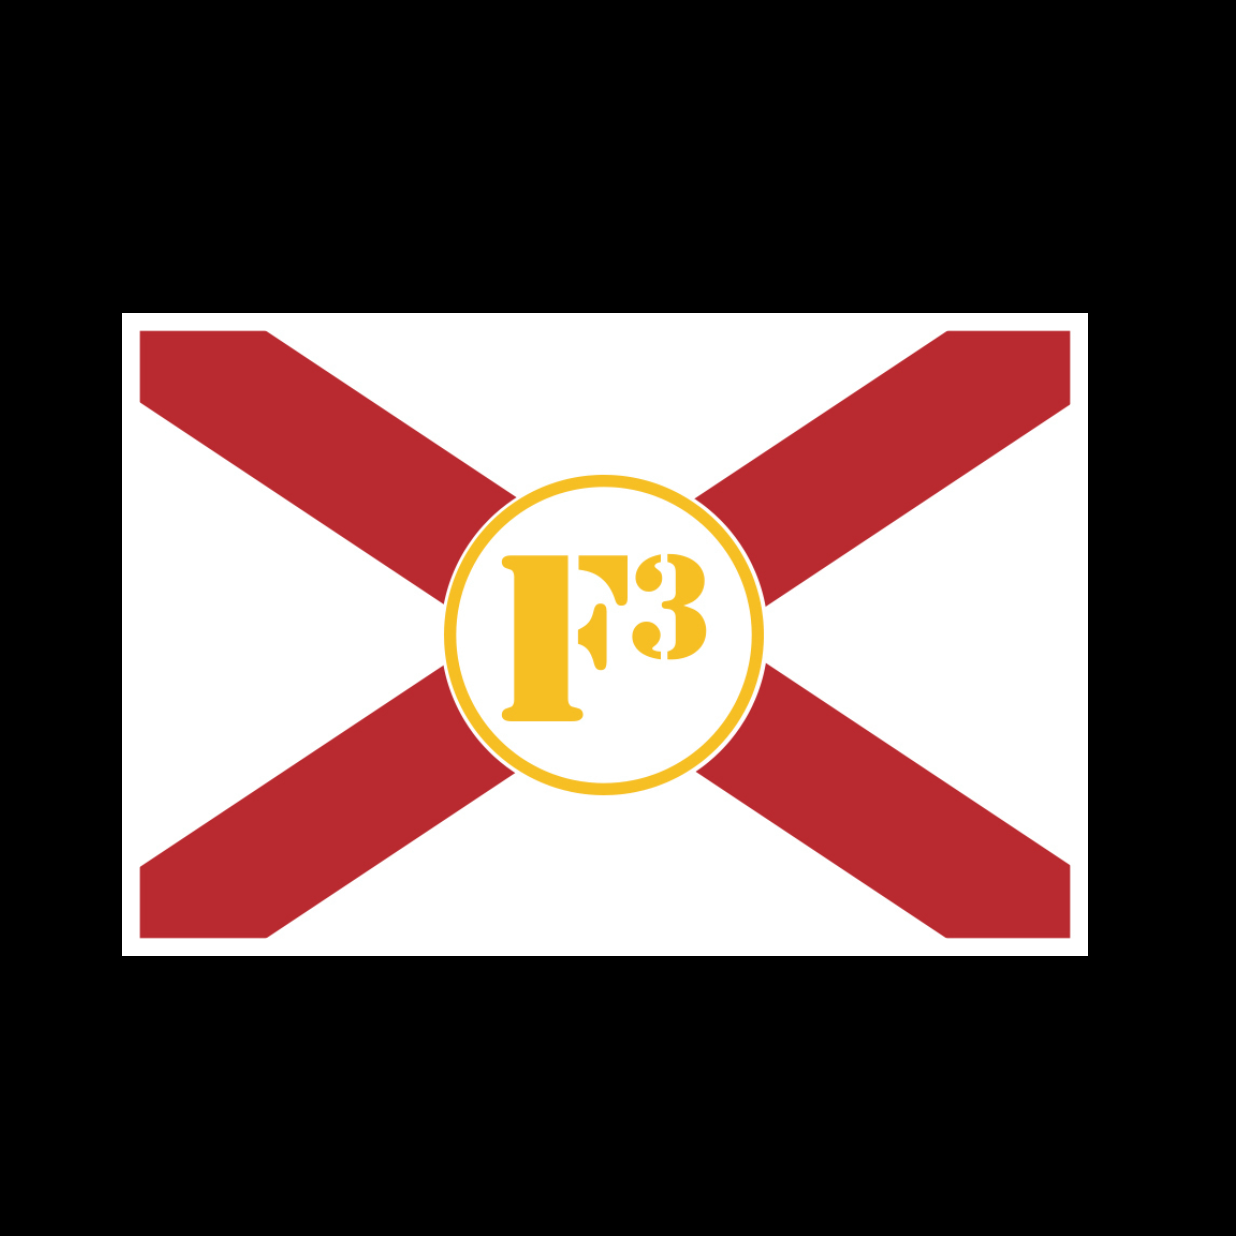 F3 Florida Flag Patch